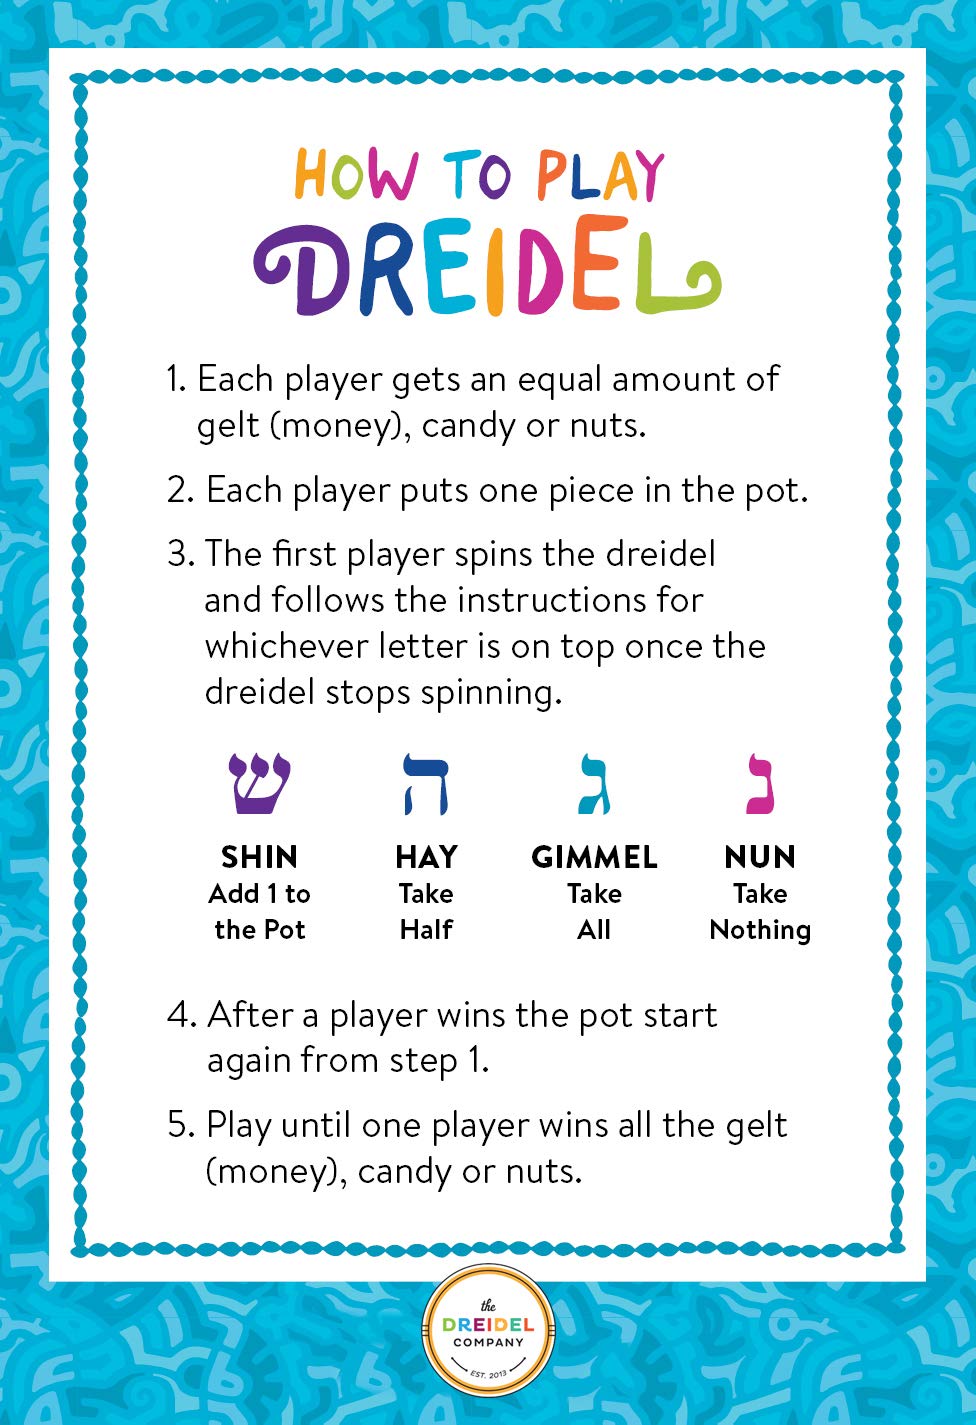 Hanukkah Dreidels 30 Bulk Pack Multi-Color Plastic Chanukah Draydels With English Transliteration In Reusable Ziplock Bag- Includes 3 Dreidel Game Instruction Cards (30-Pack)